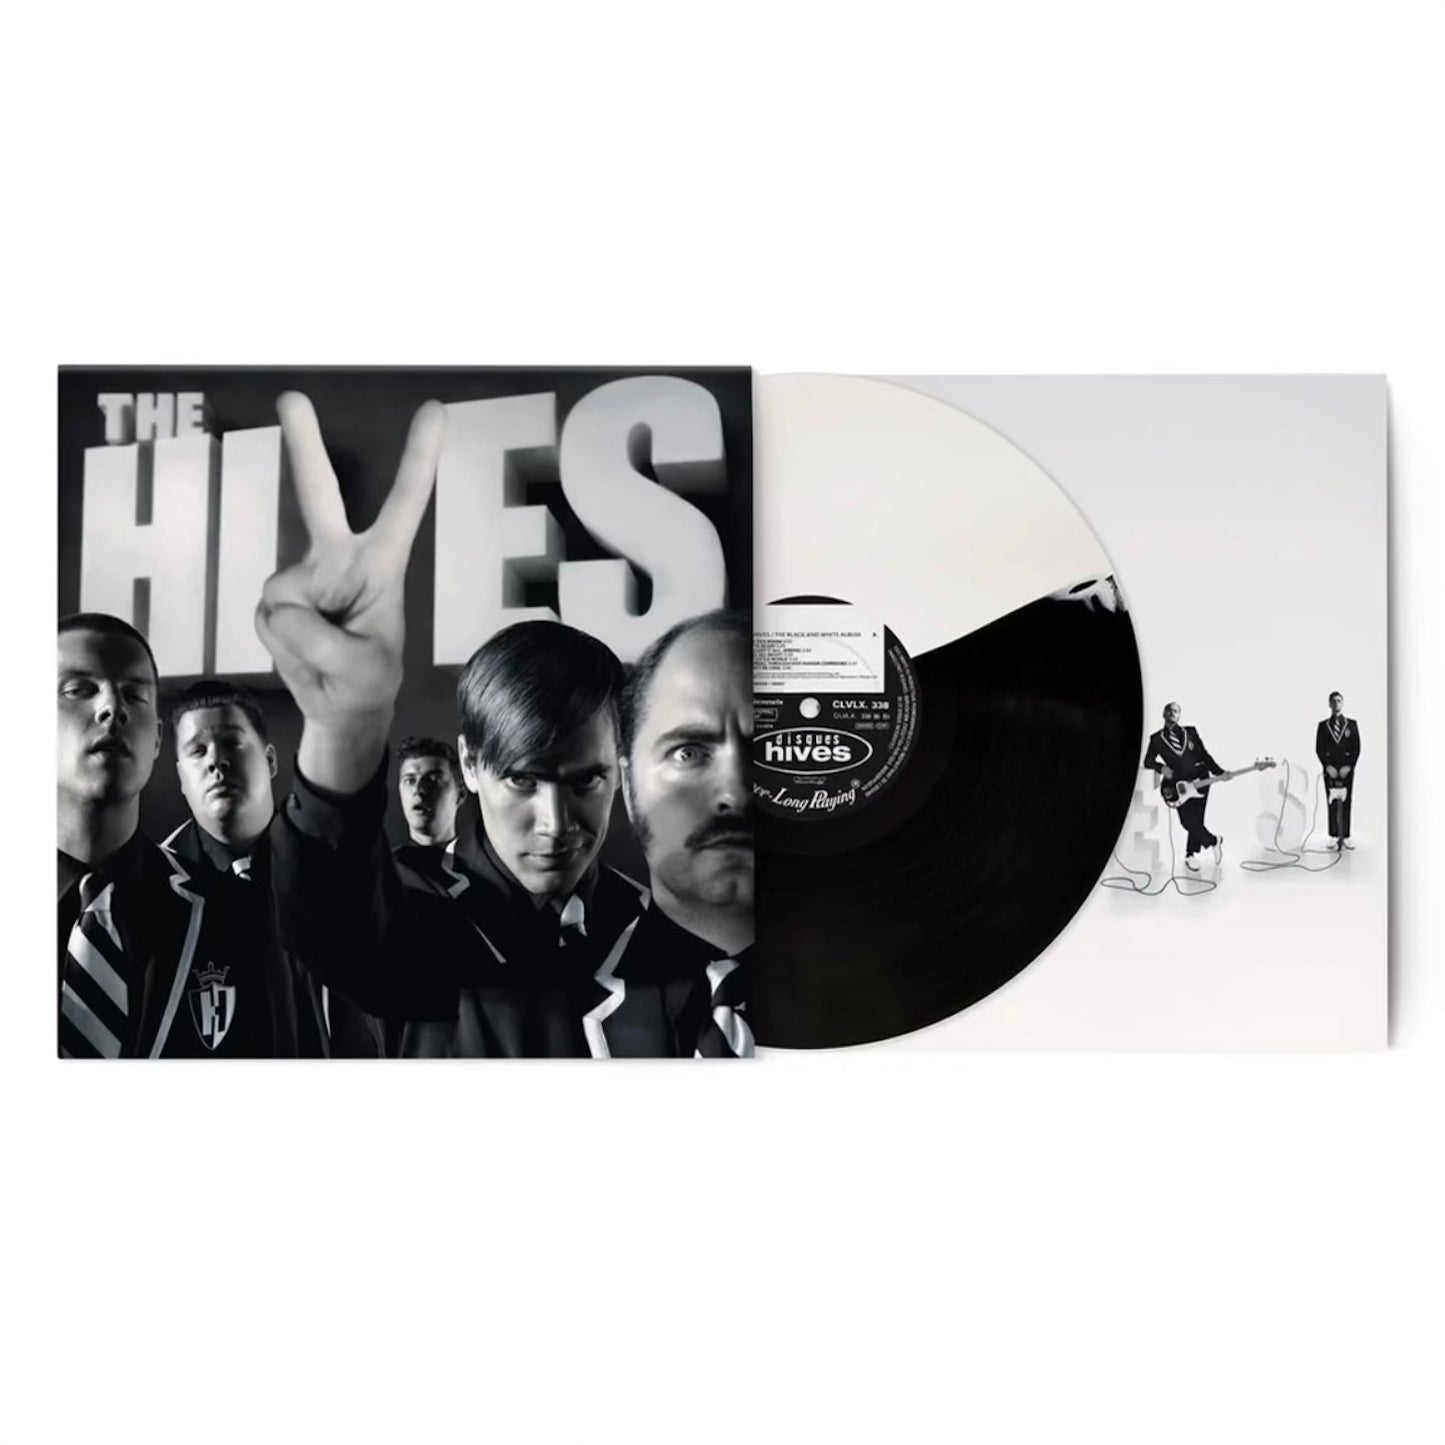 RSD2024 - THE HIVES - THE BLACK AND WHITE. LP [Ltd. Ed. Black & White Vinyl / Edition of 4000]